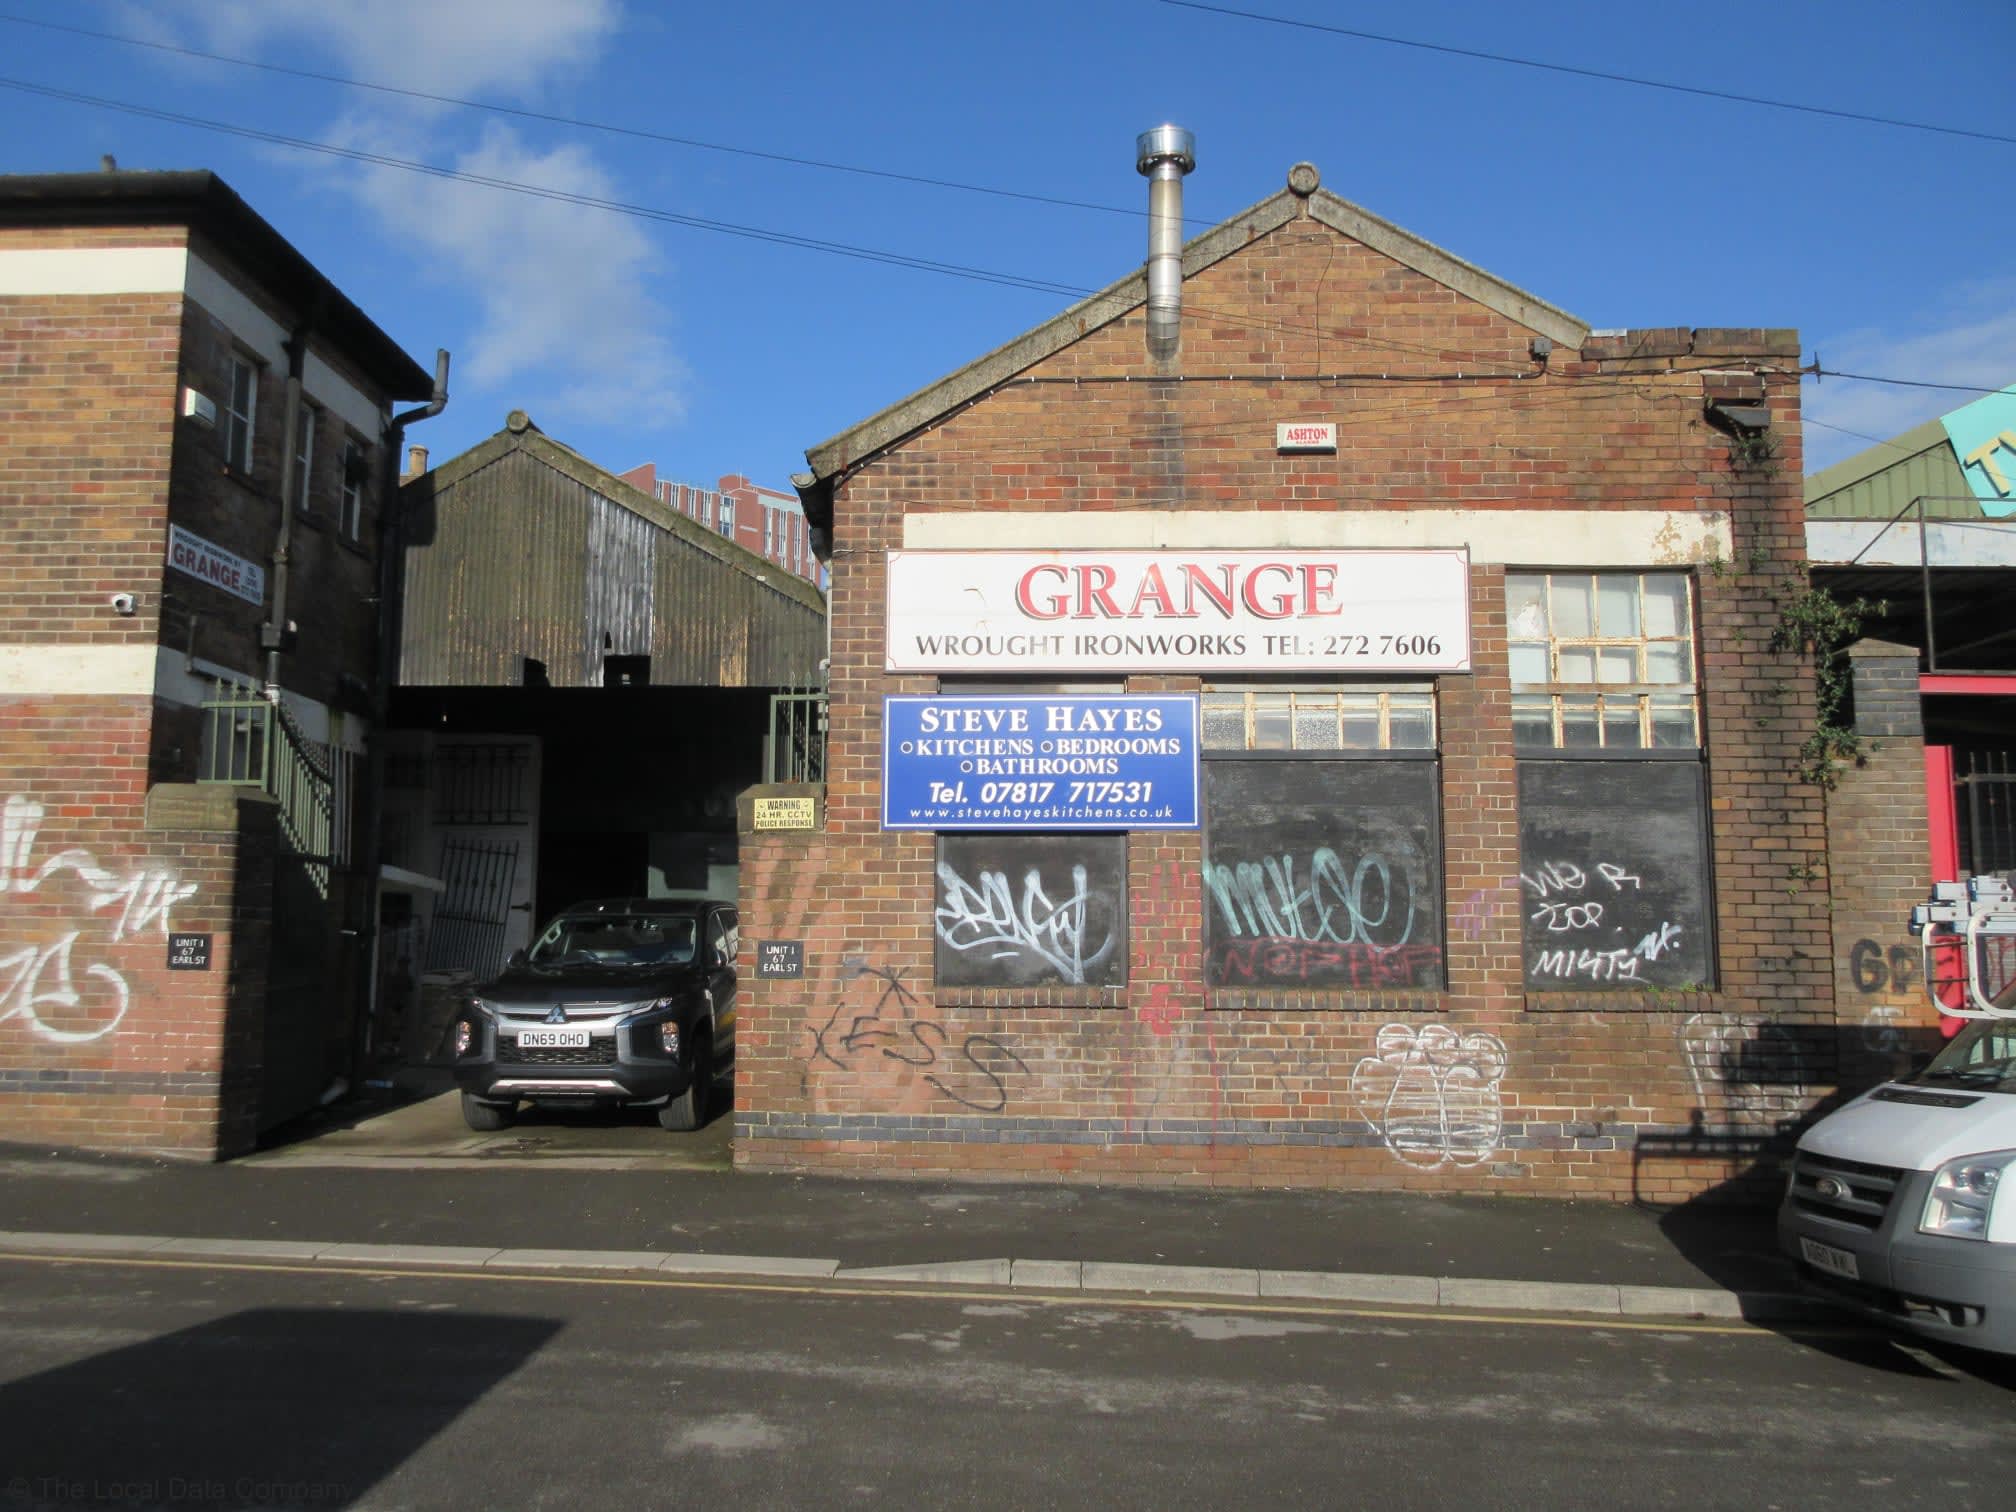 Images Grange Fabrications Ltd